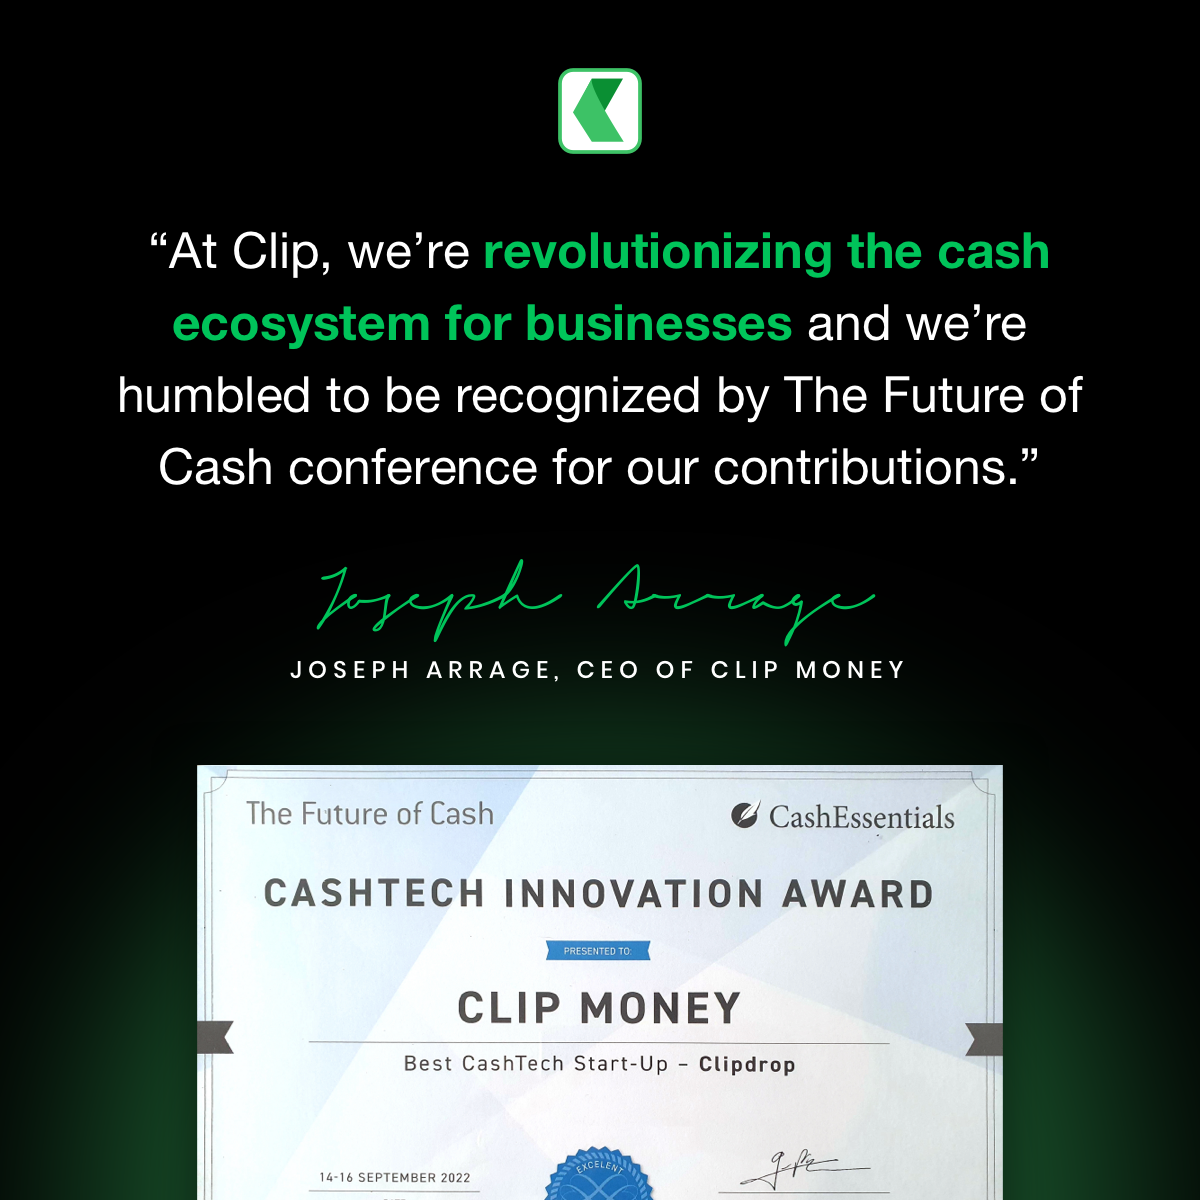 CashTech Innovation Award